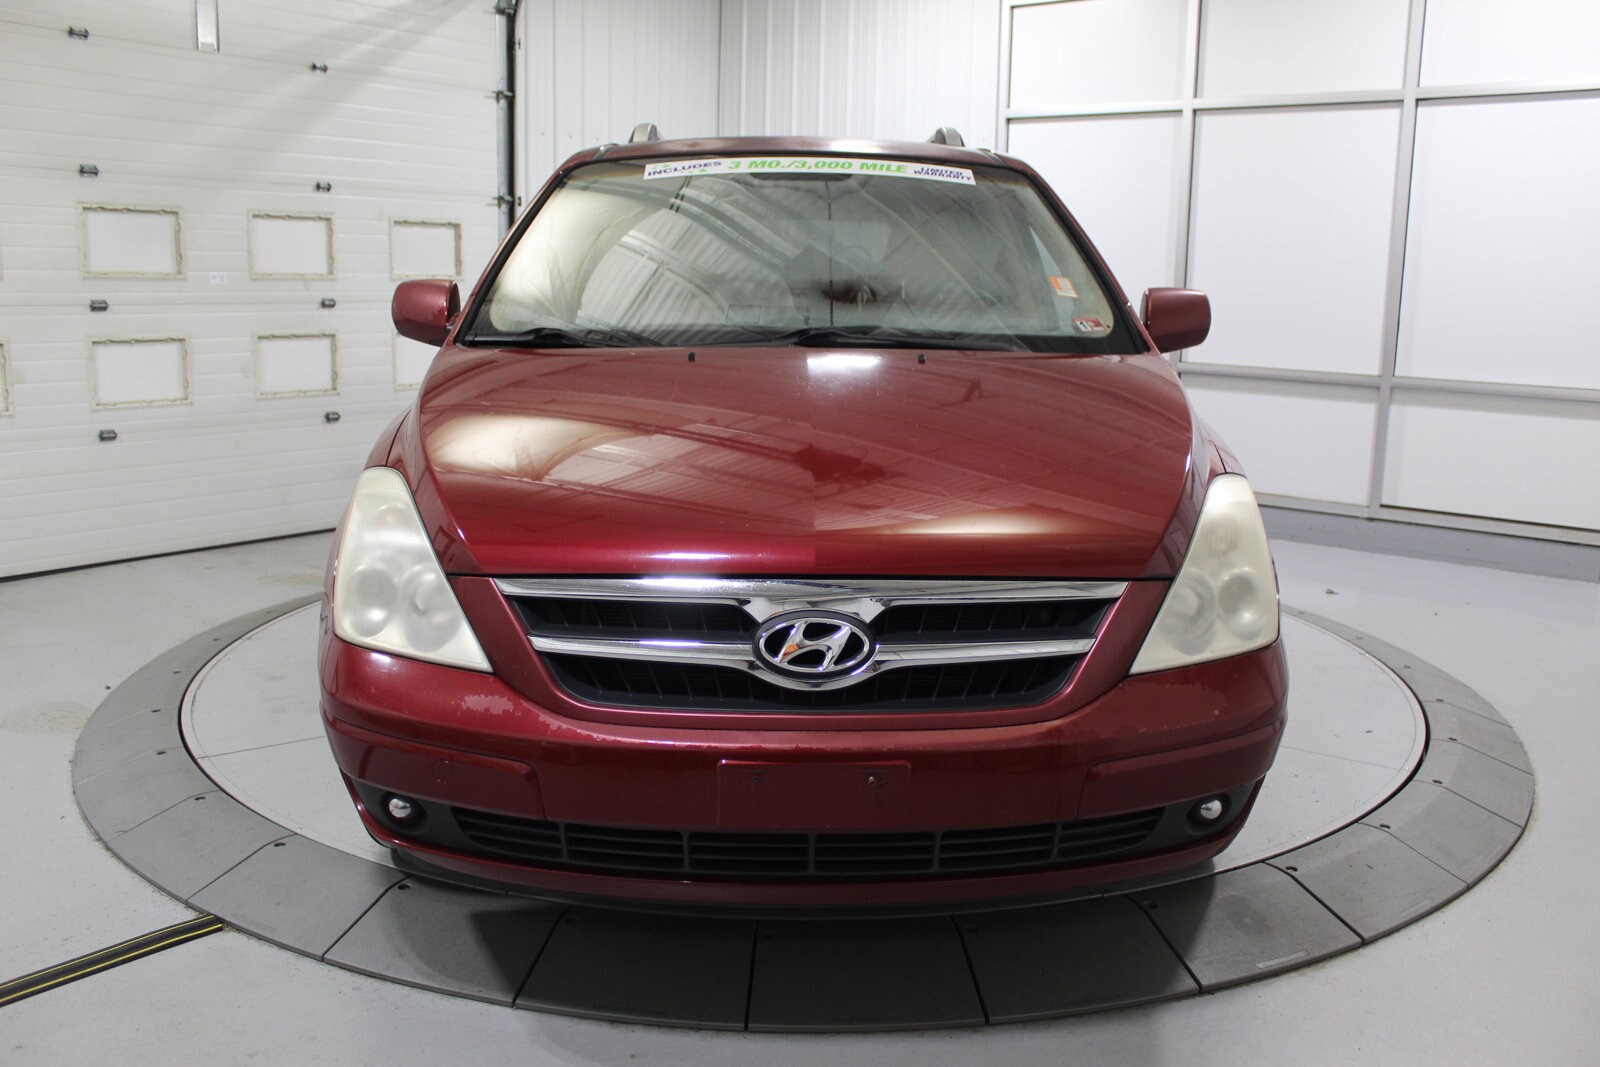 Used 2007 Hyundai Entourage SE with VIN KNDMC233X76043858 for sale in Christiansburg, VA